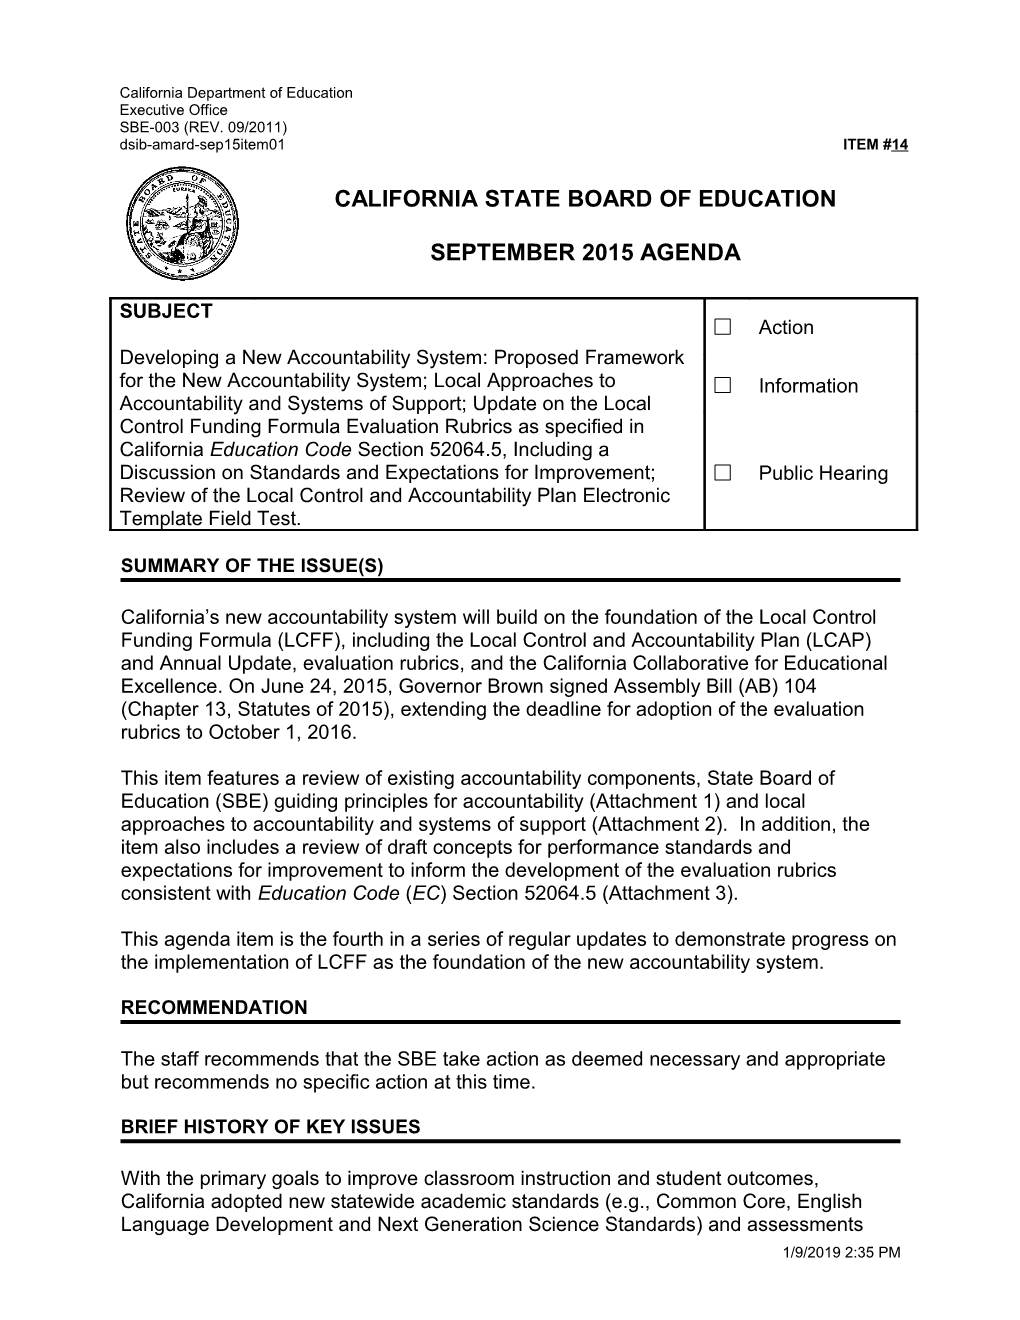 September 2015 Agenda Item 14 - Meeting Agendas (CA State Board of Education)